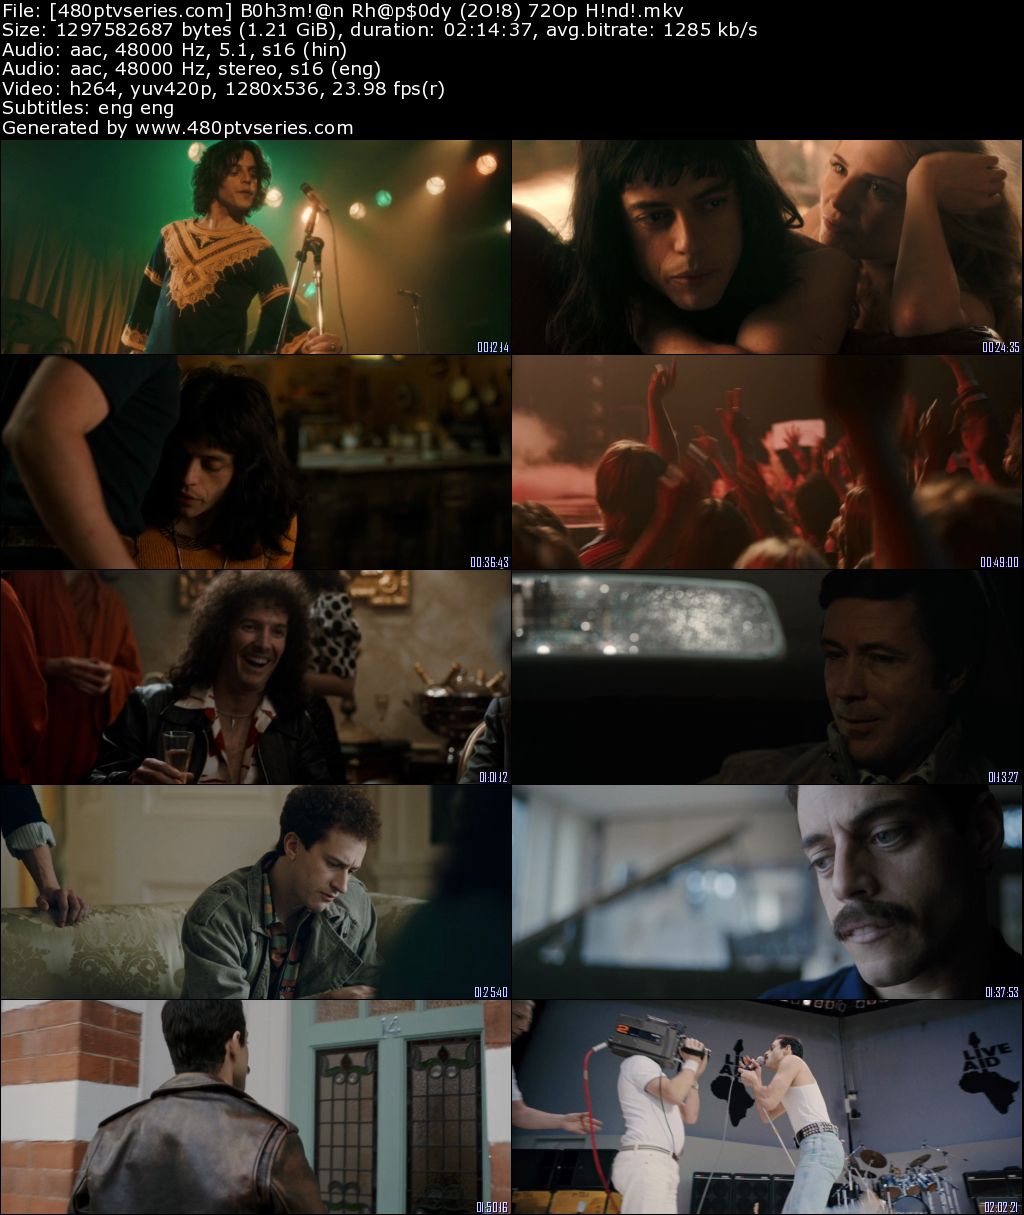 Bohemian Rhapsody 2018 Full English Movie Download 720p 480p HD